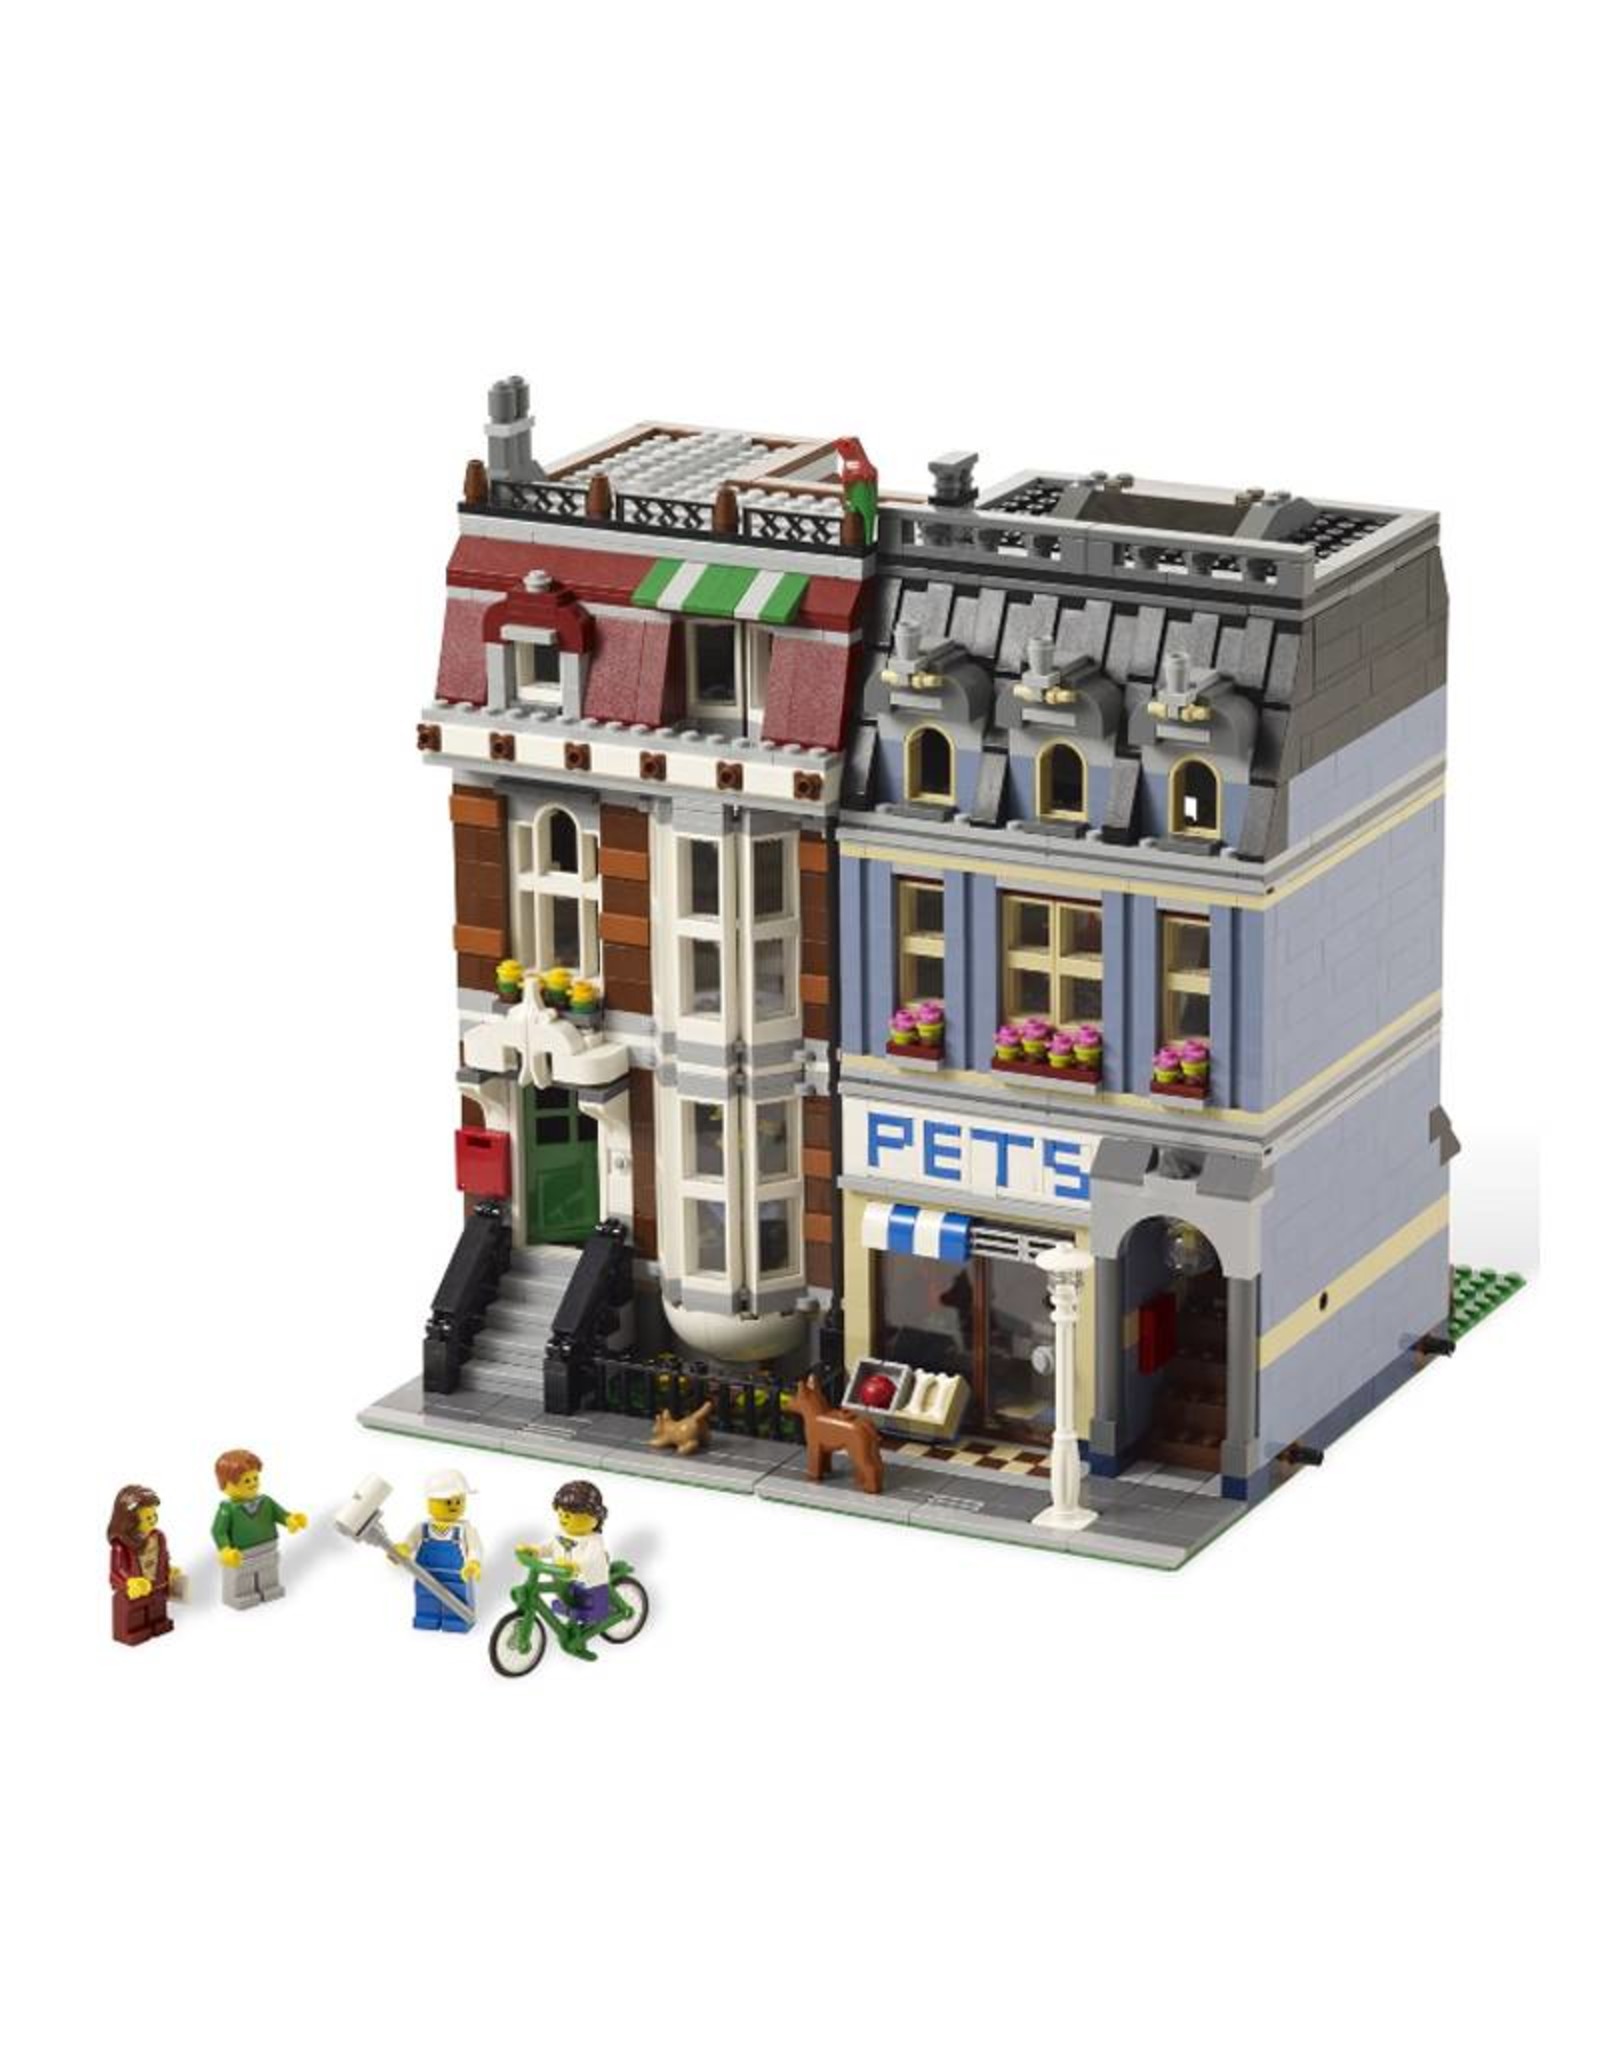 LEGO LEGO 10218 Pet Shop CREATOR